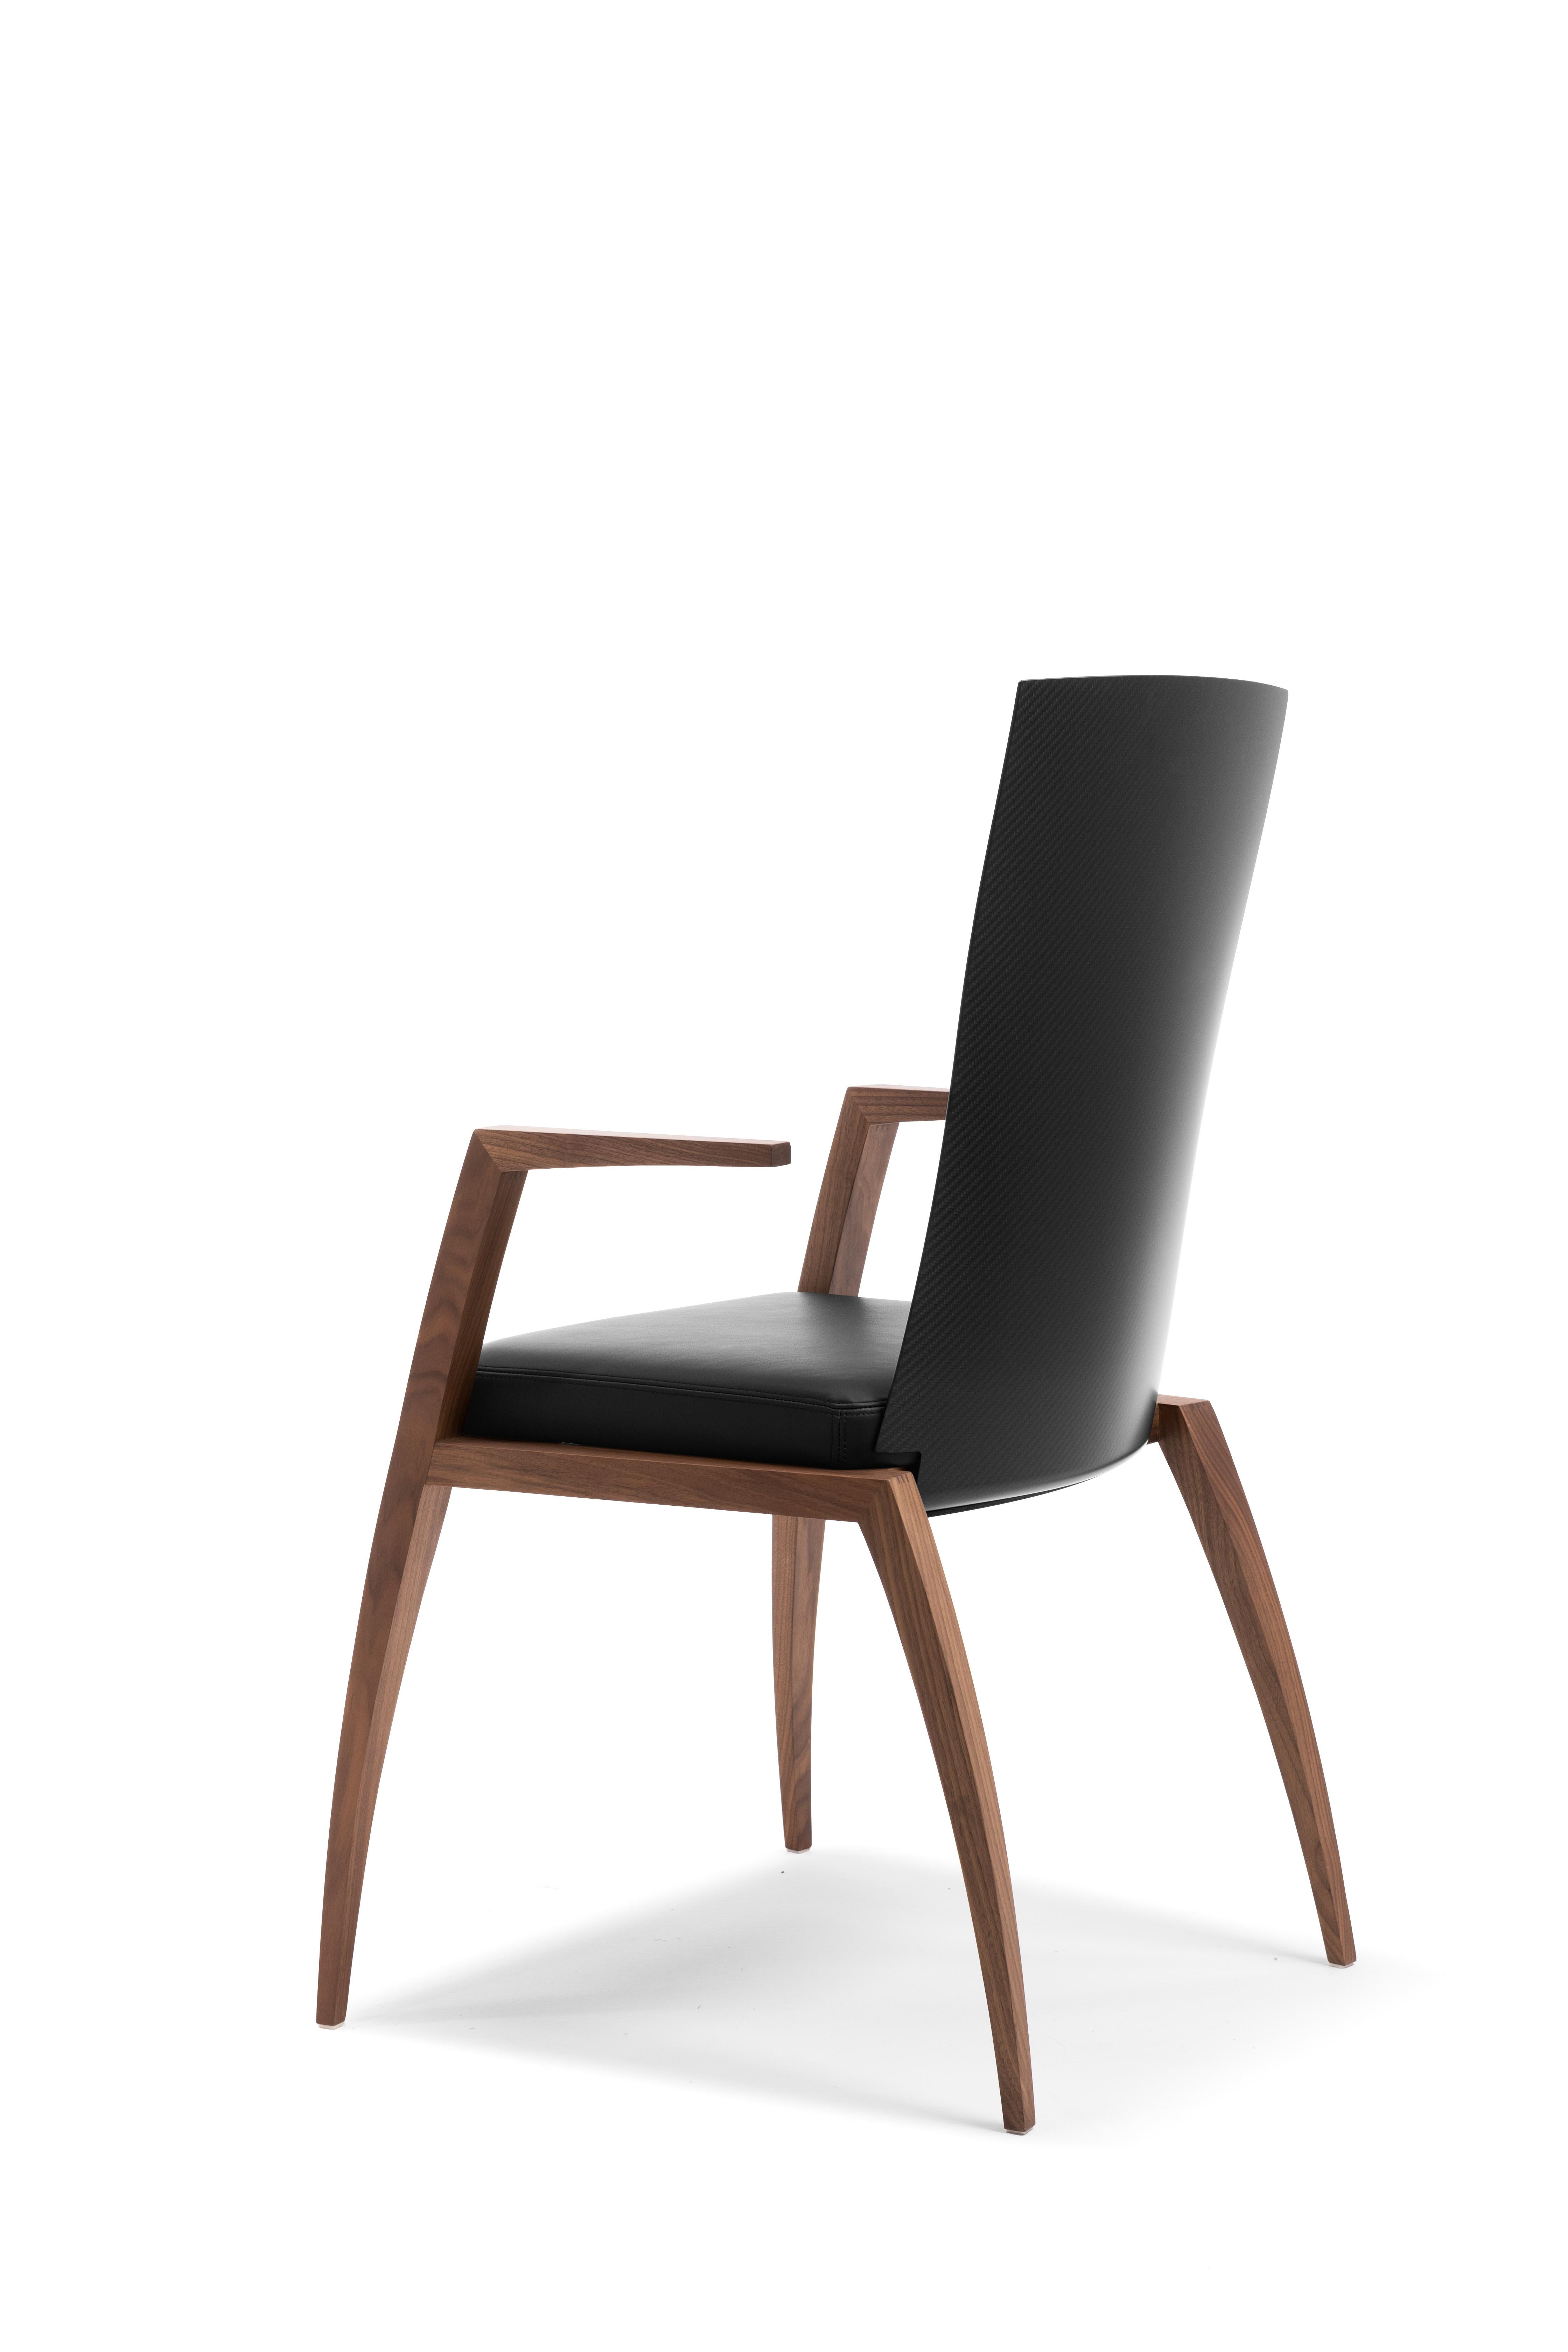 carbon fiber chairs